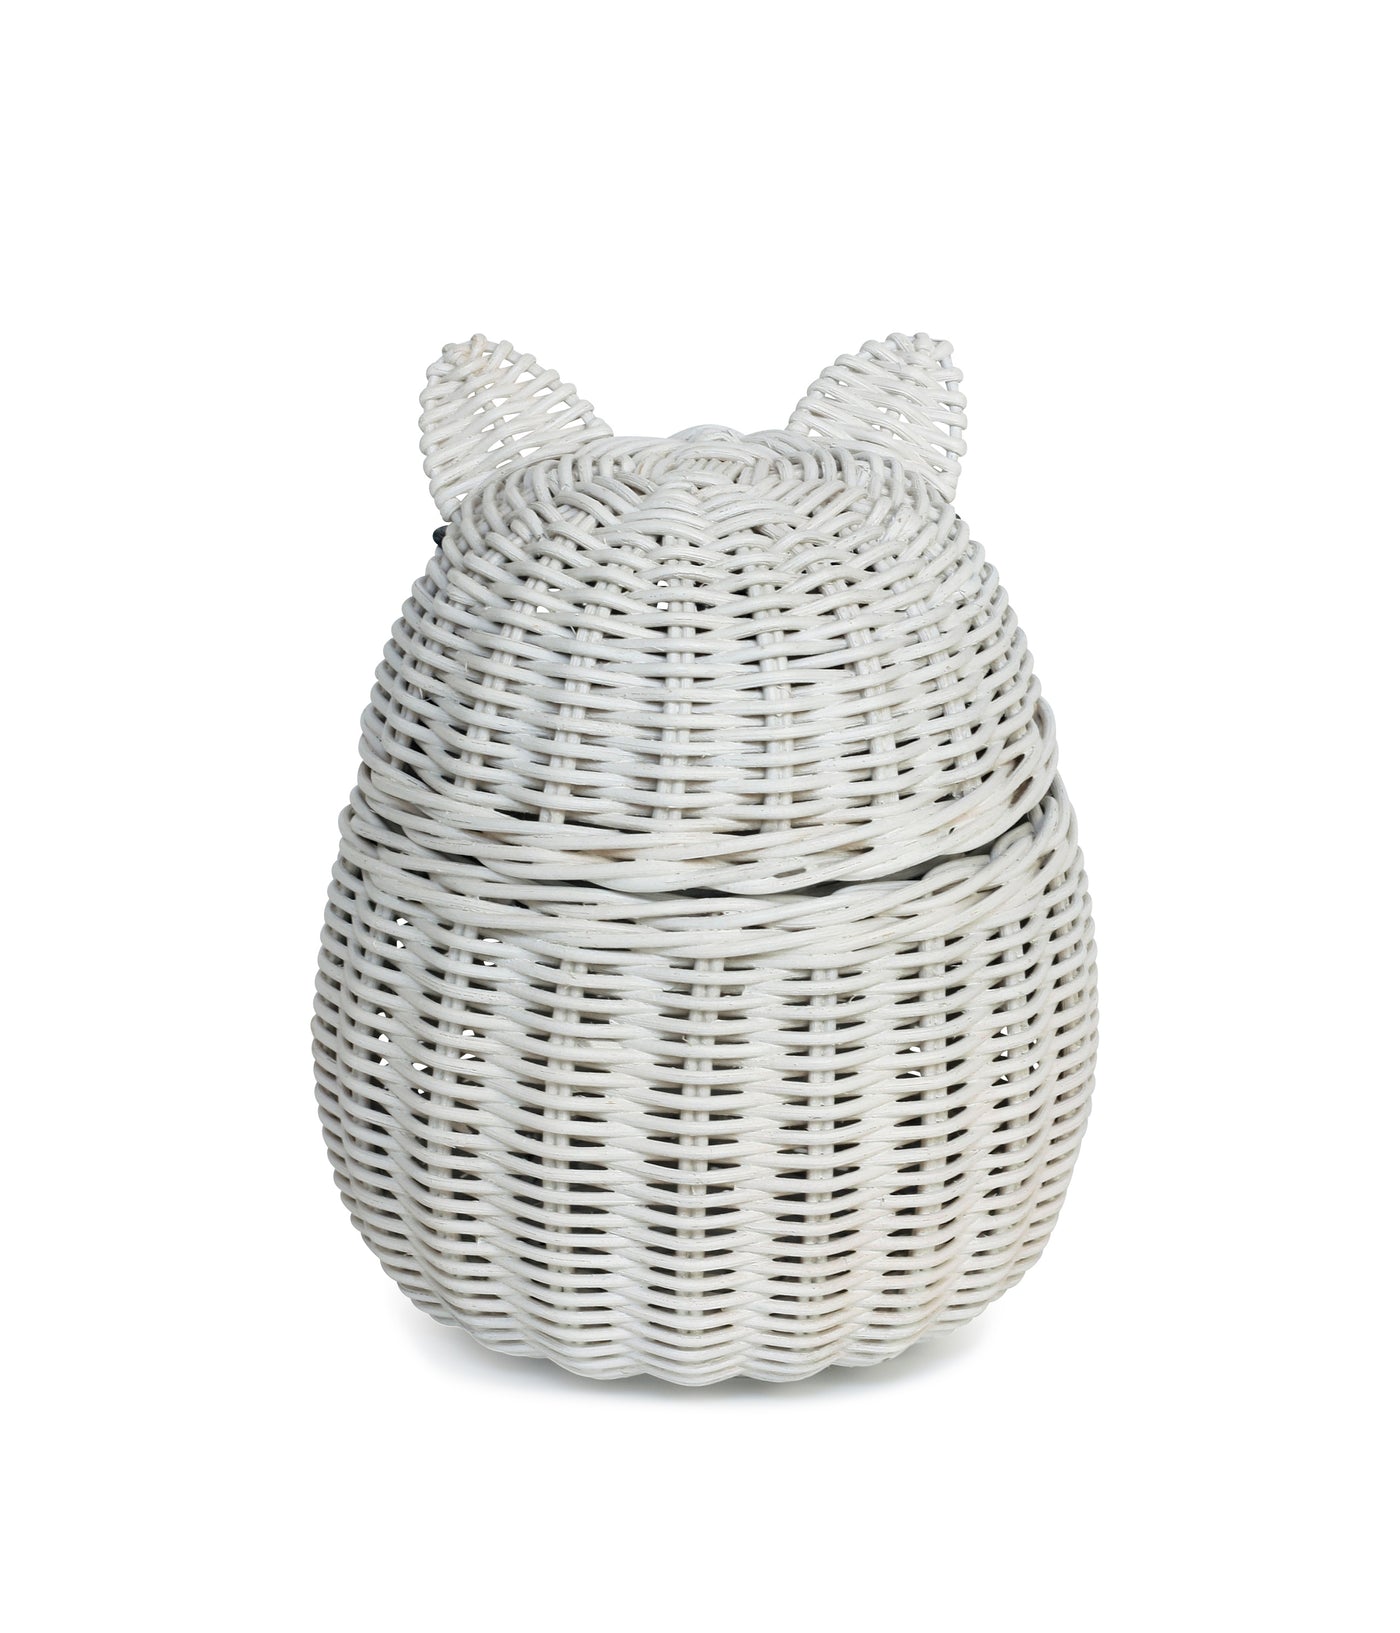 Cat Rattan Storage Basket with Lid Decorative Bin Home Decor Hand Woven Shelf Organizer Cute Handmade Handcrafted Gift Art Artwork Wicker Kitten